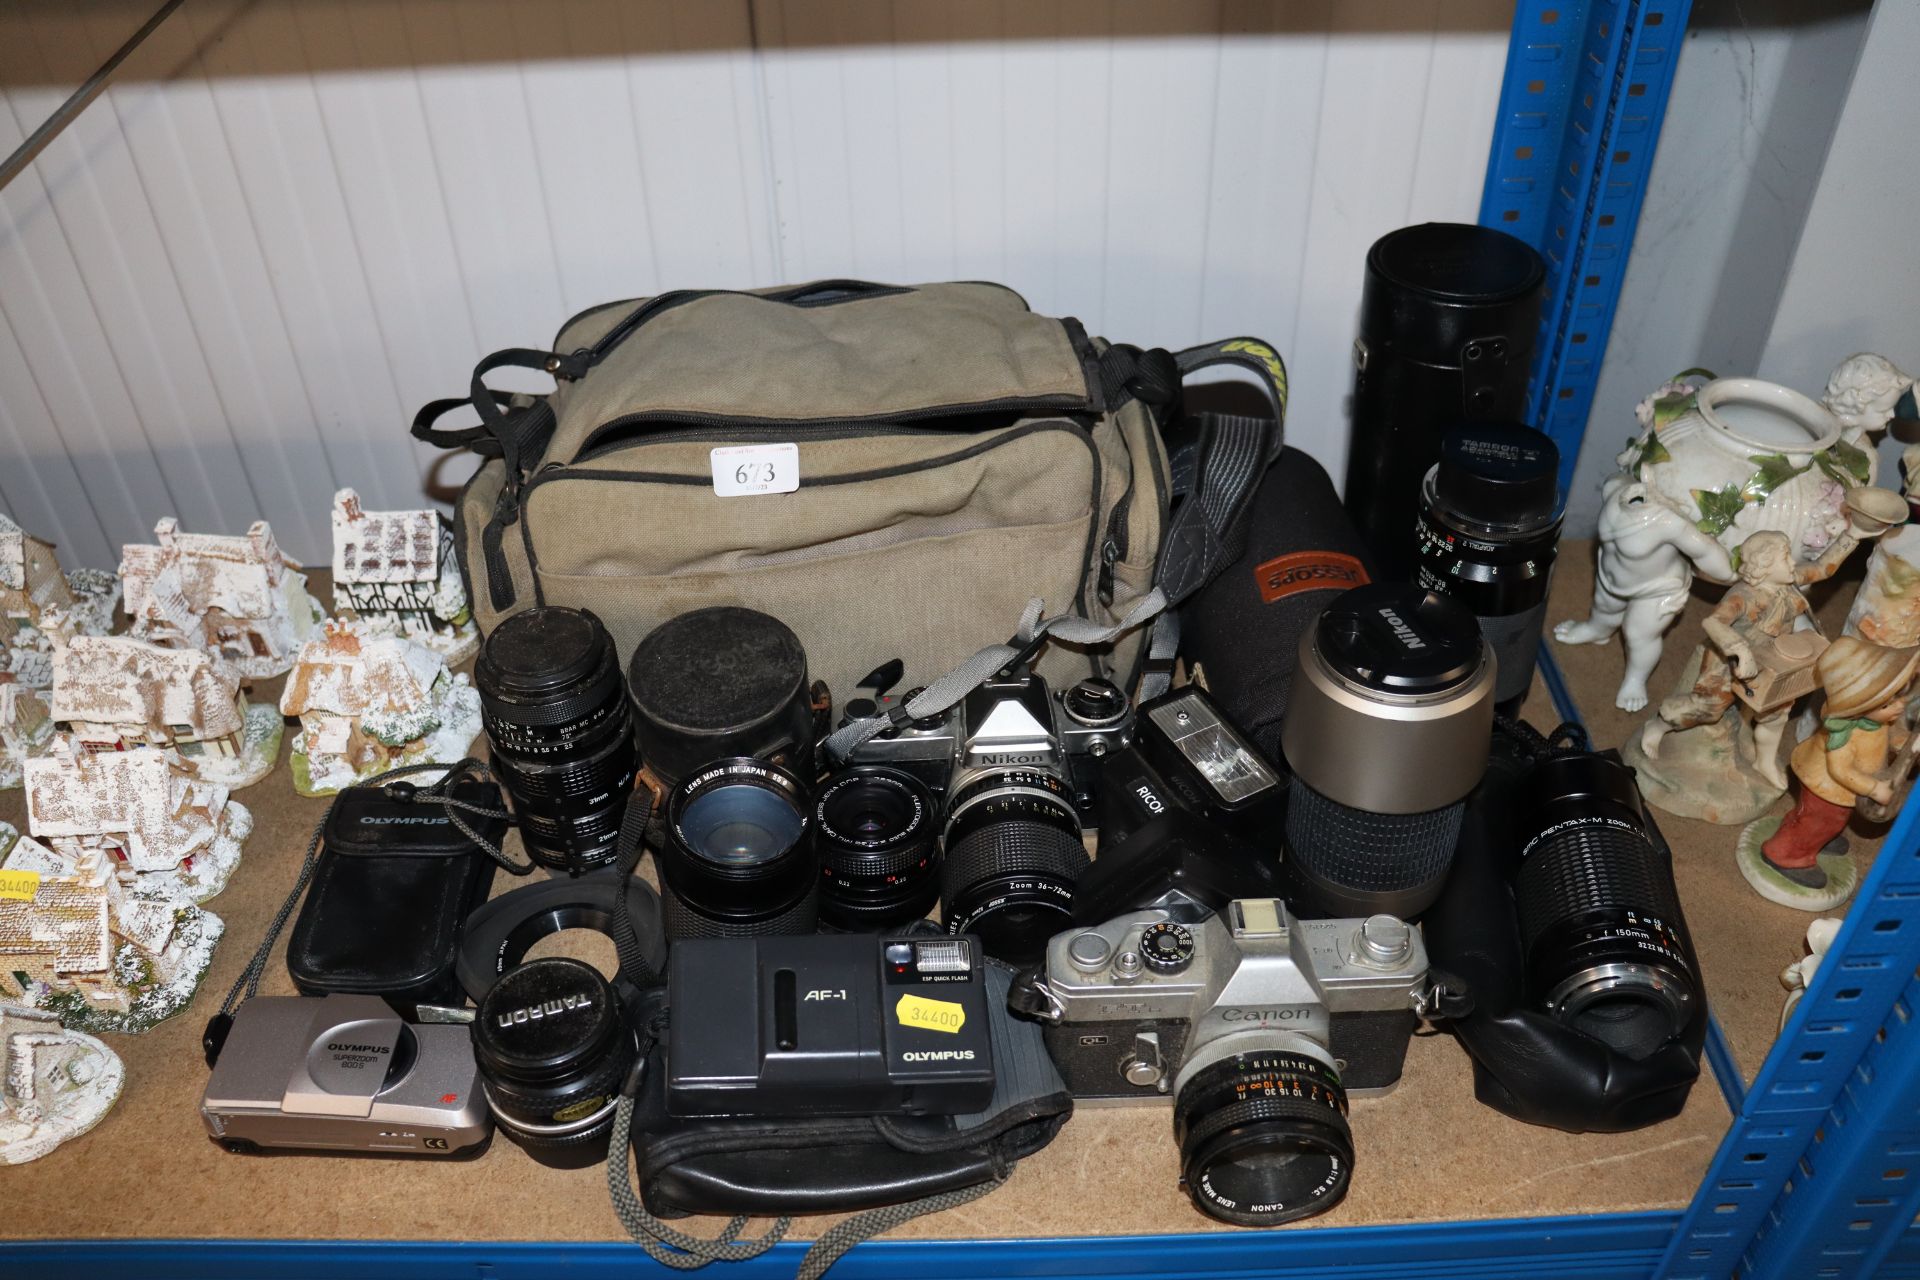 A Canon FT camera; Nikon camera; various other cam